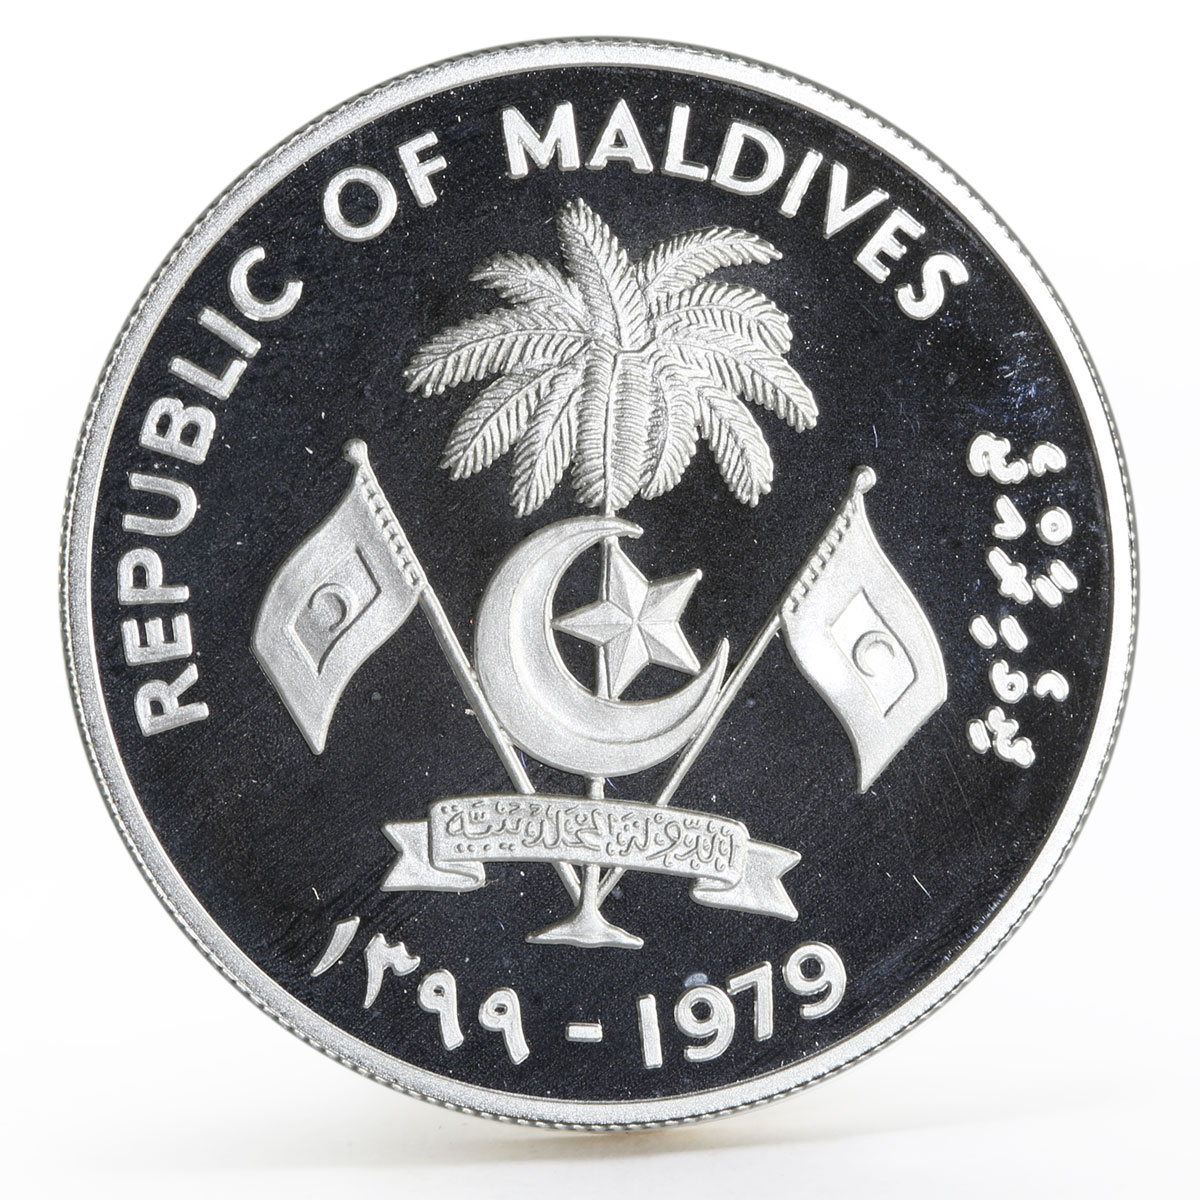 Maldives 20 rufiyaa International Year of the Child proof silver coin 1979